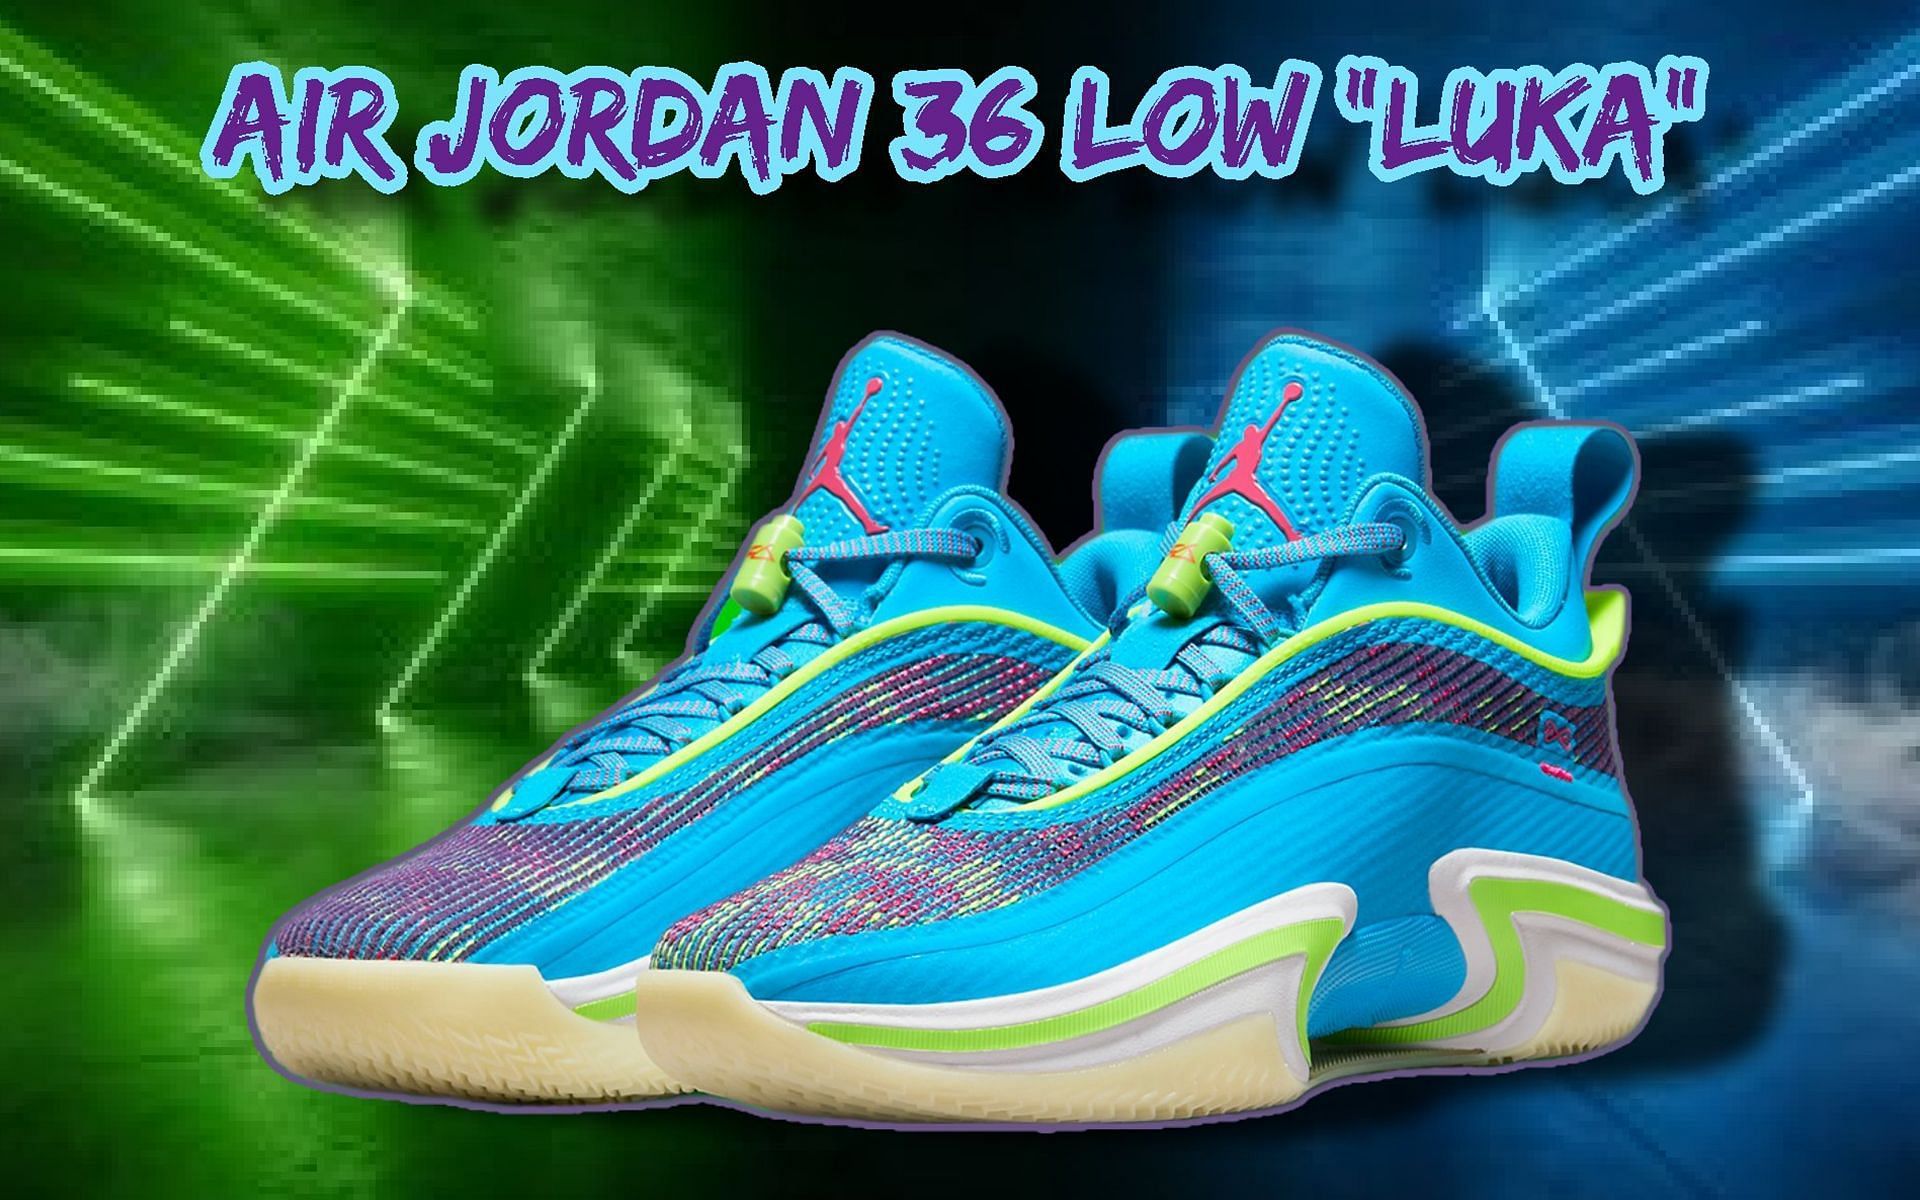 Air Jordan 36 Low Luka Player Exclusive shoes (Image via Twitter/@fanofbasketbal2)